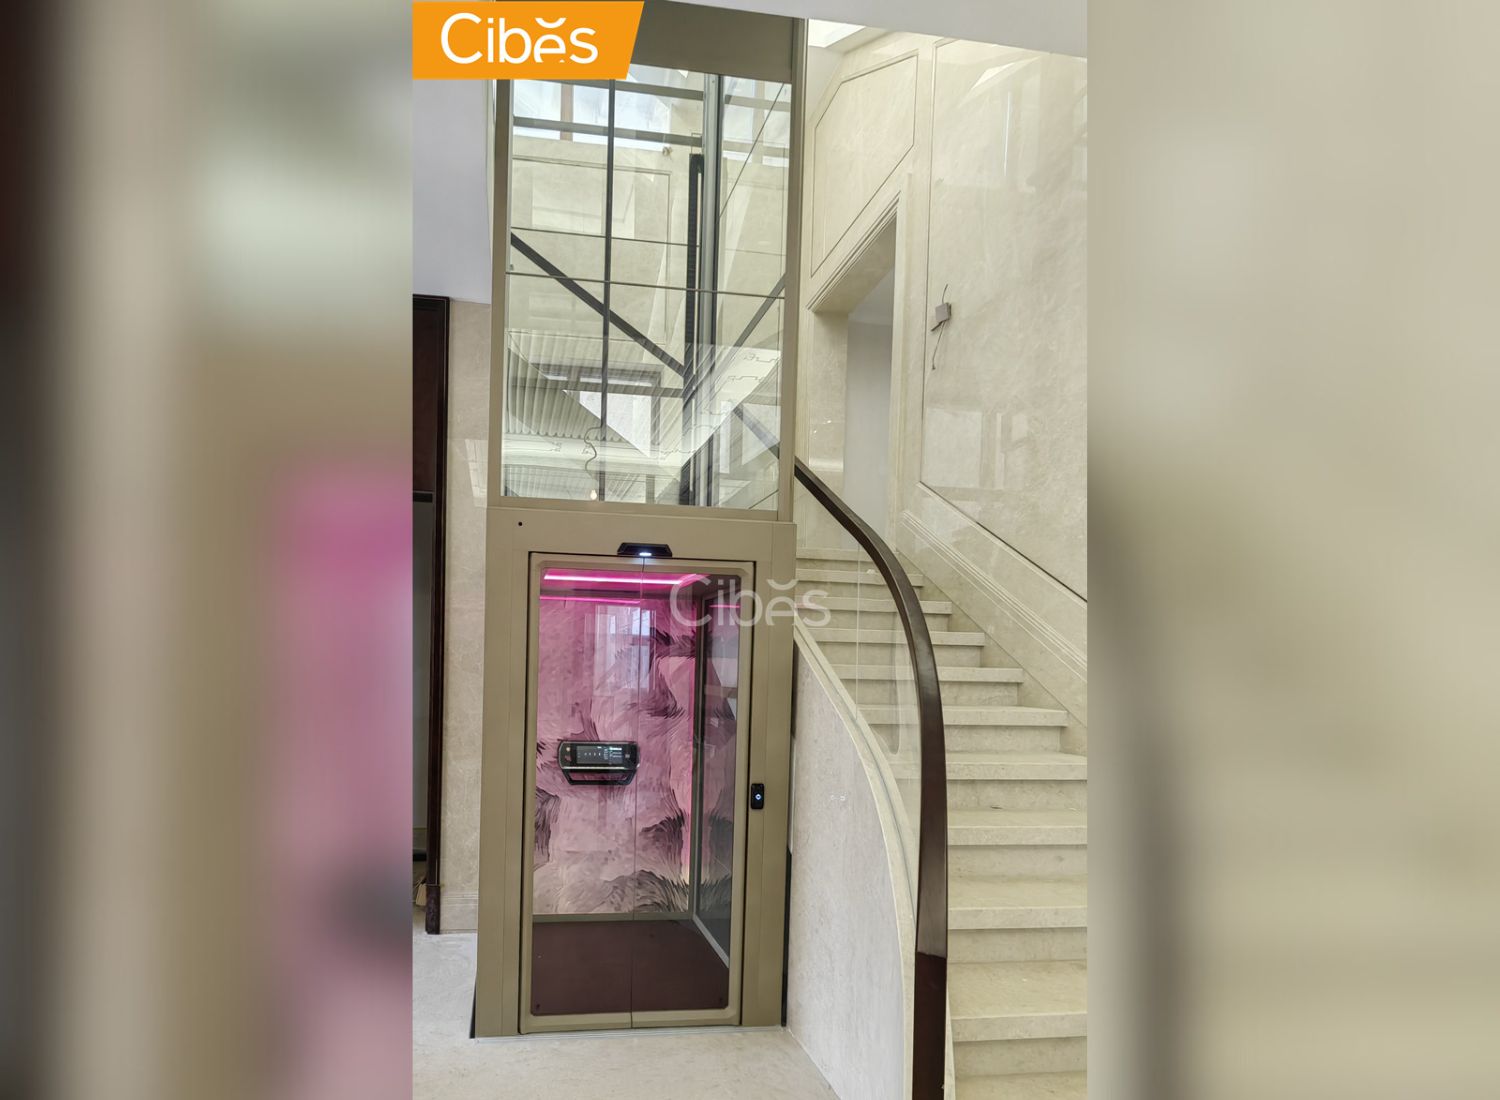 GLOBAL PROJECTS Cibes lift home elevater ซีเบส ลิฟท์ ลิฟต์บ้าน (20)